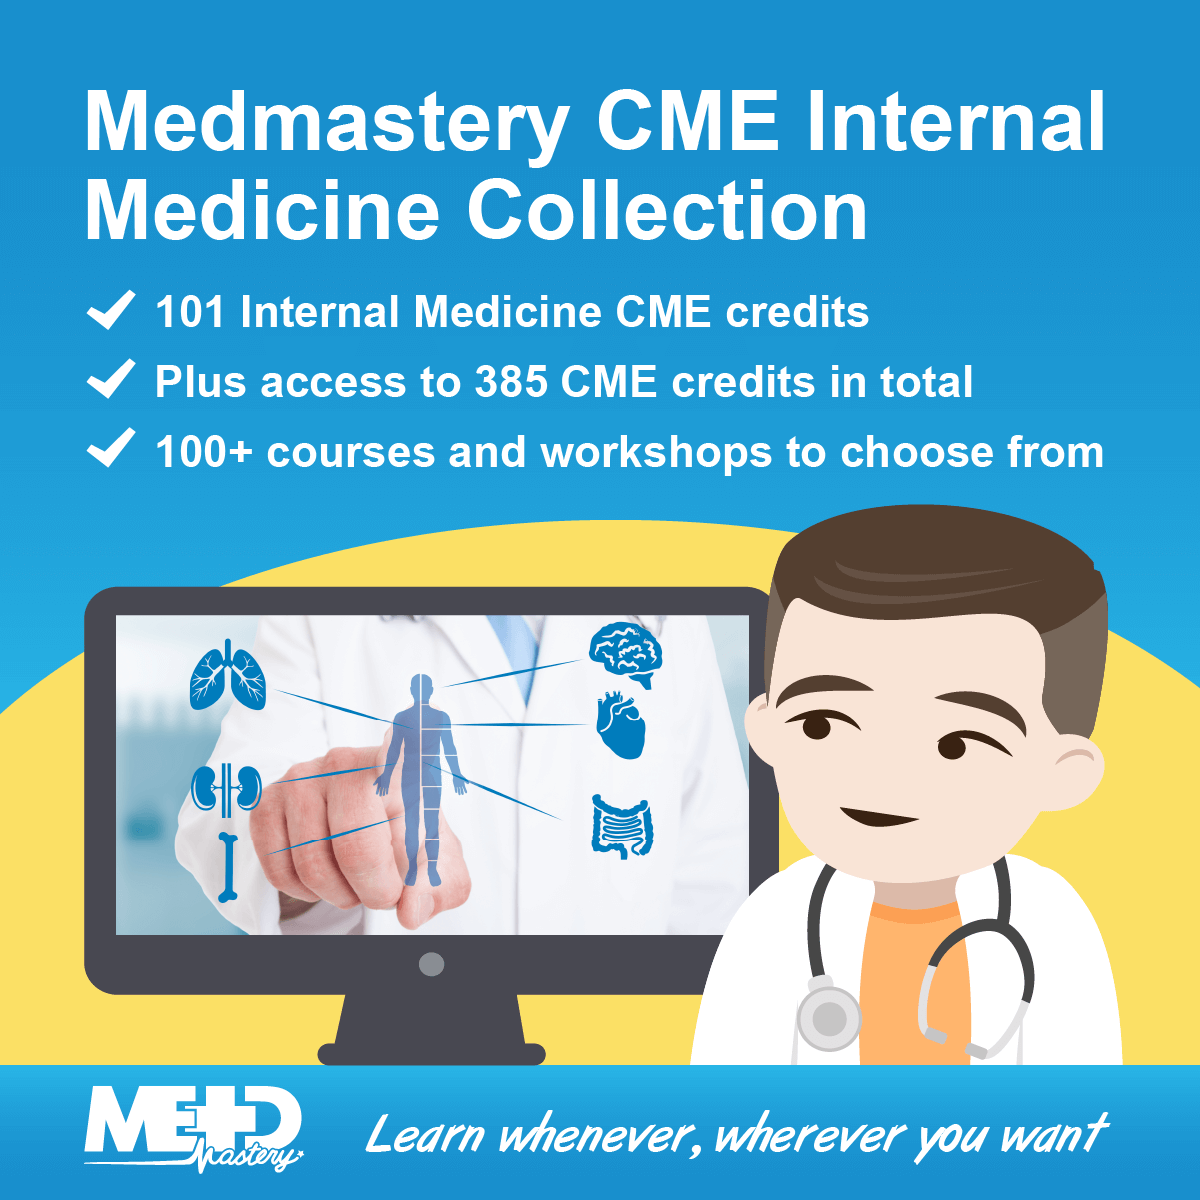 Medmastery CME Internal Medicine Collection